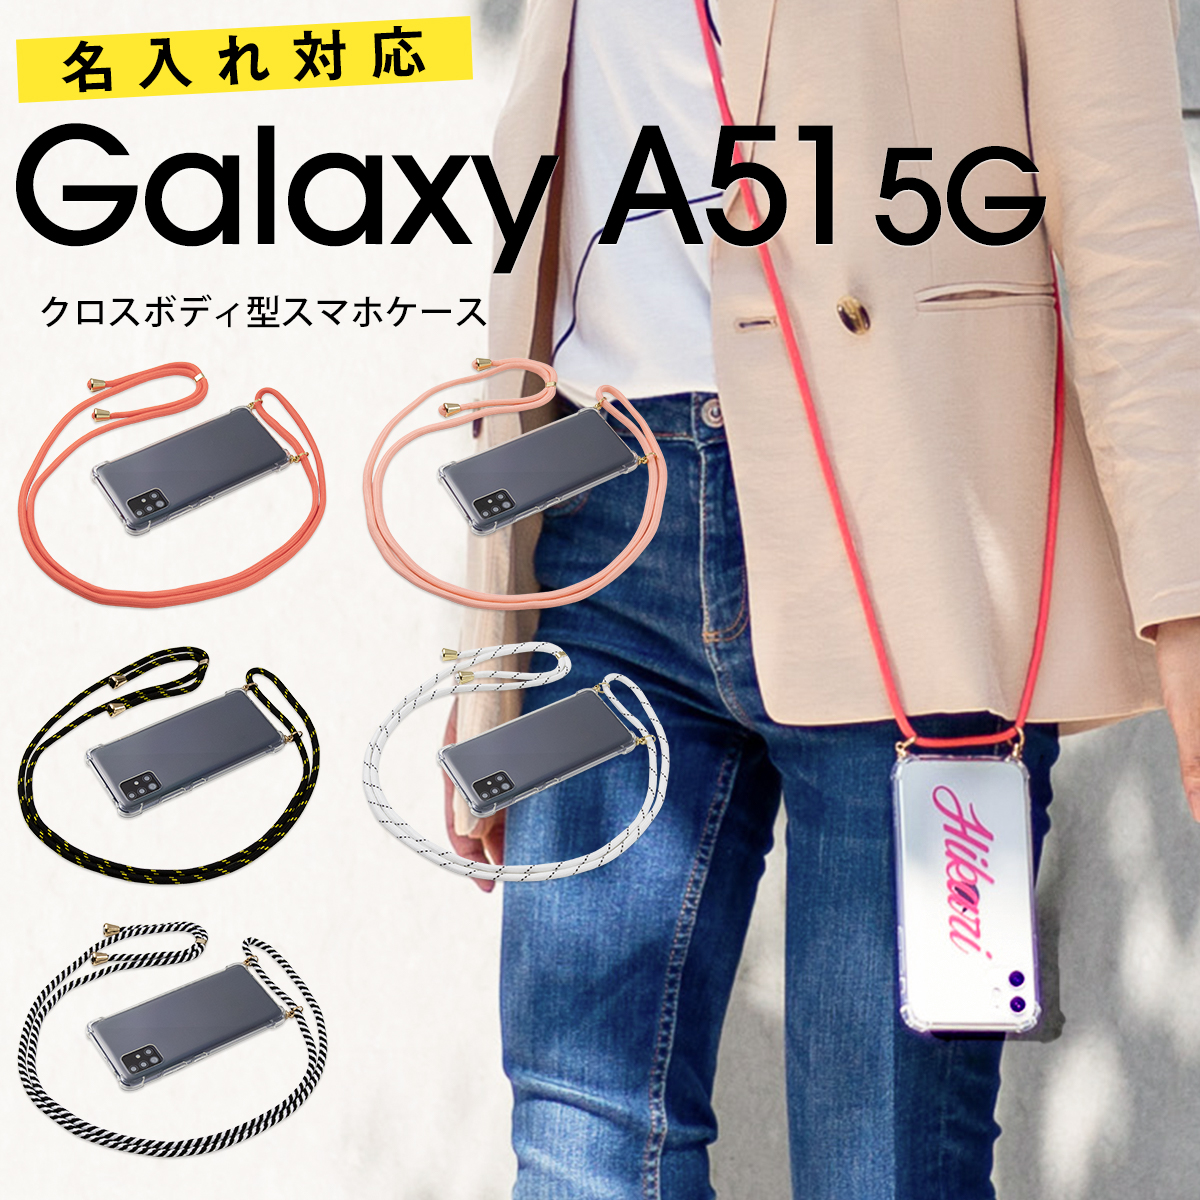 【B】SC-54A/Galaxy A51 5G/357255750658105